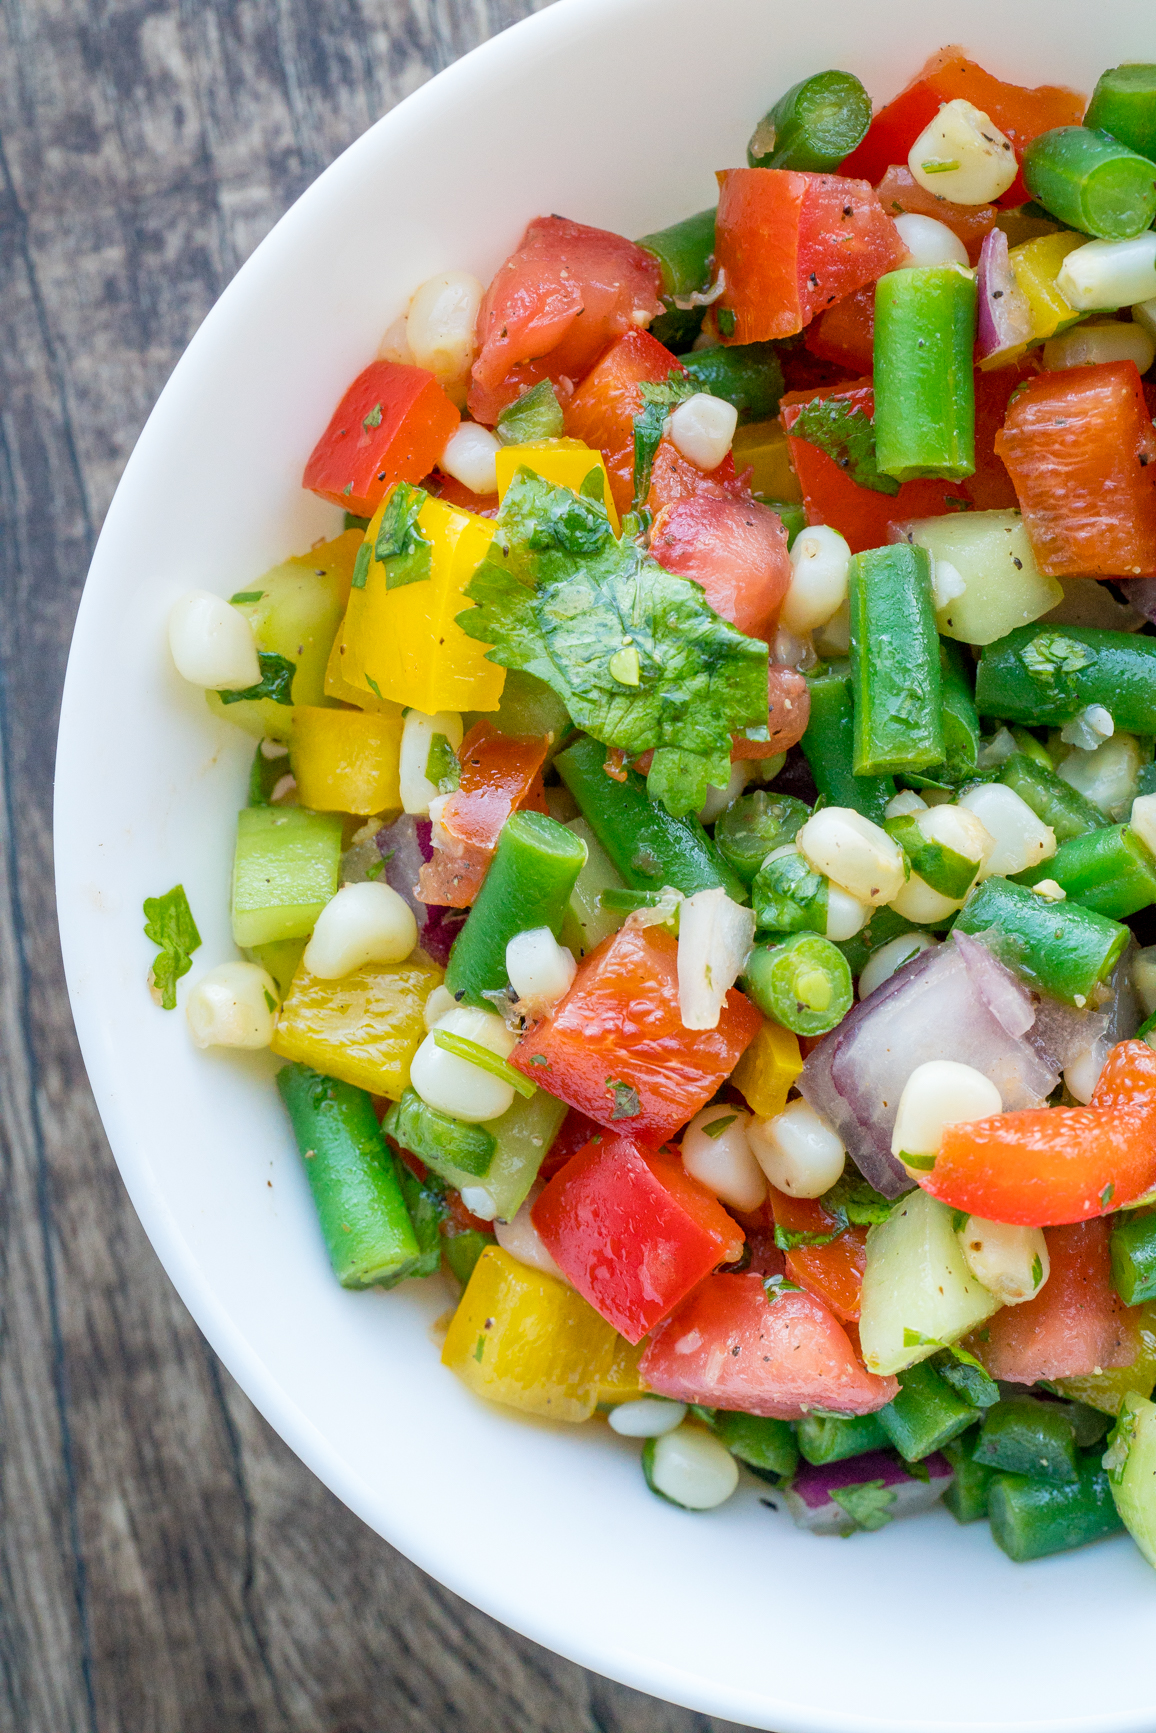 Martha Stewart's Chopped Vegetable Salad